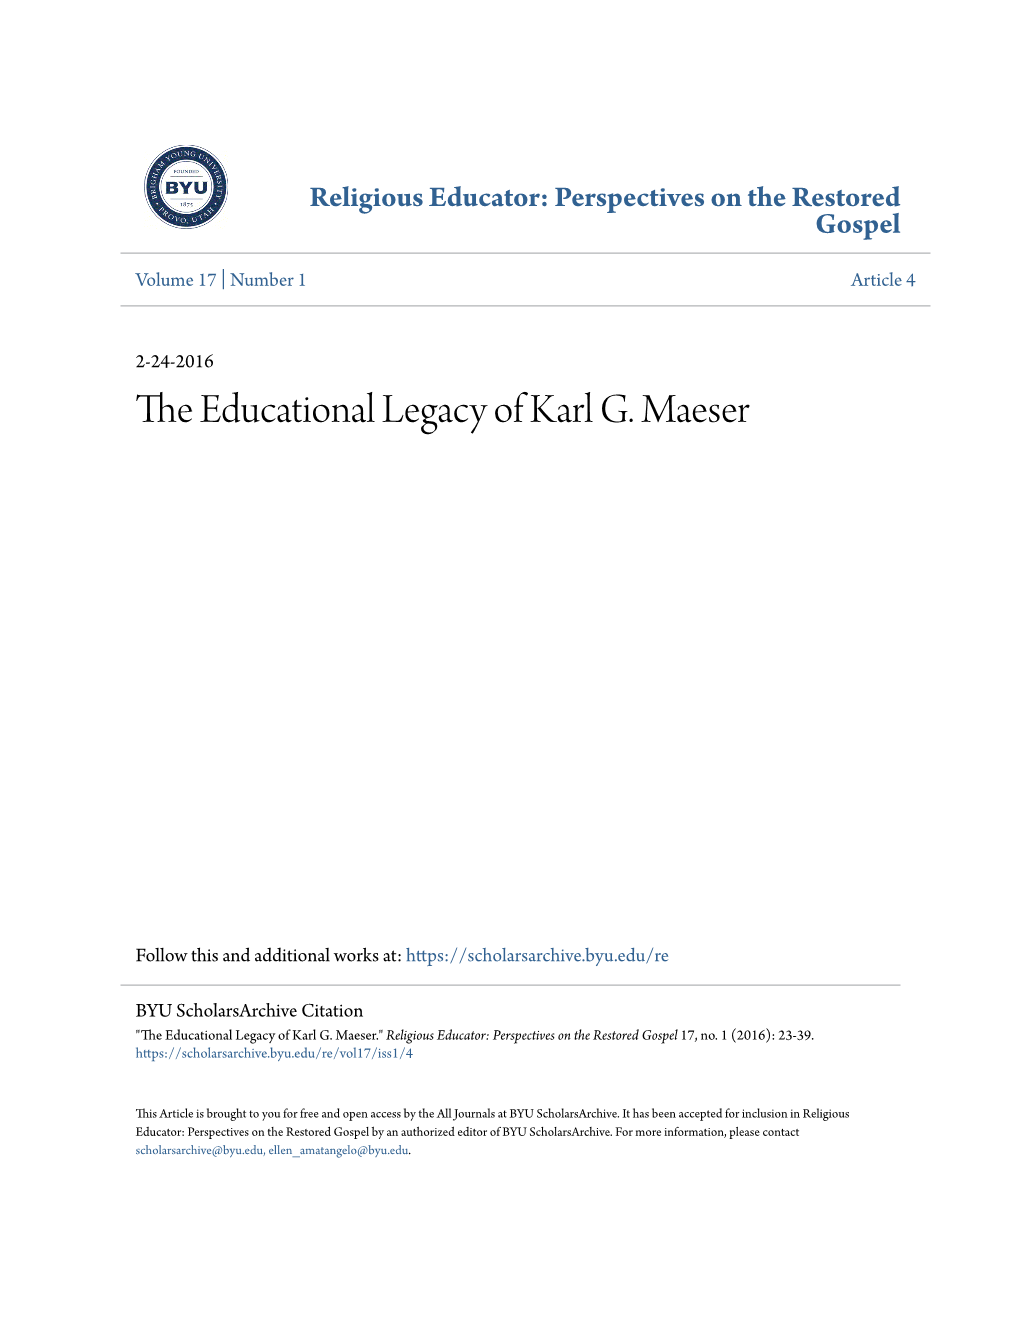 The Educational Legacy of Karl G. Maeser